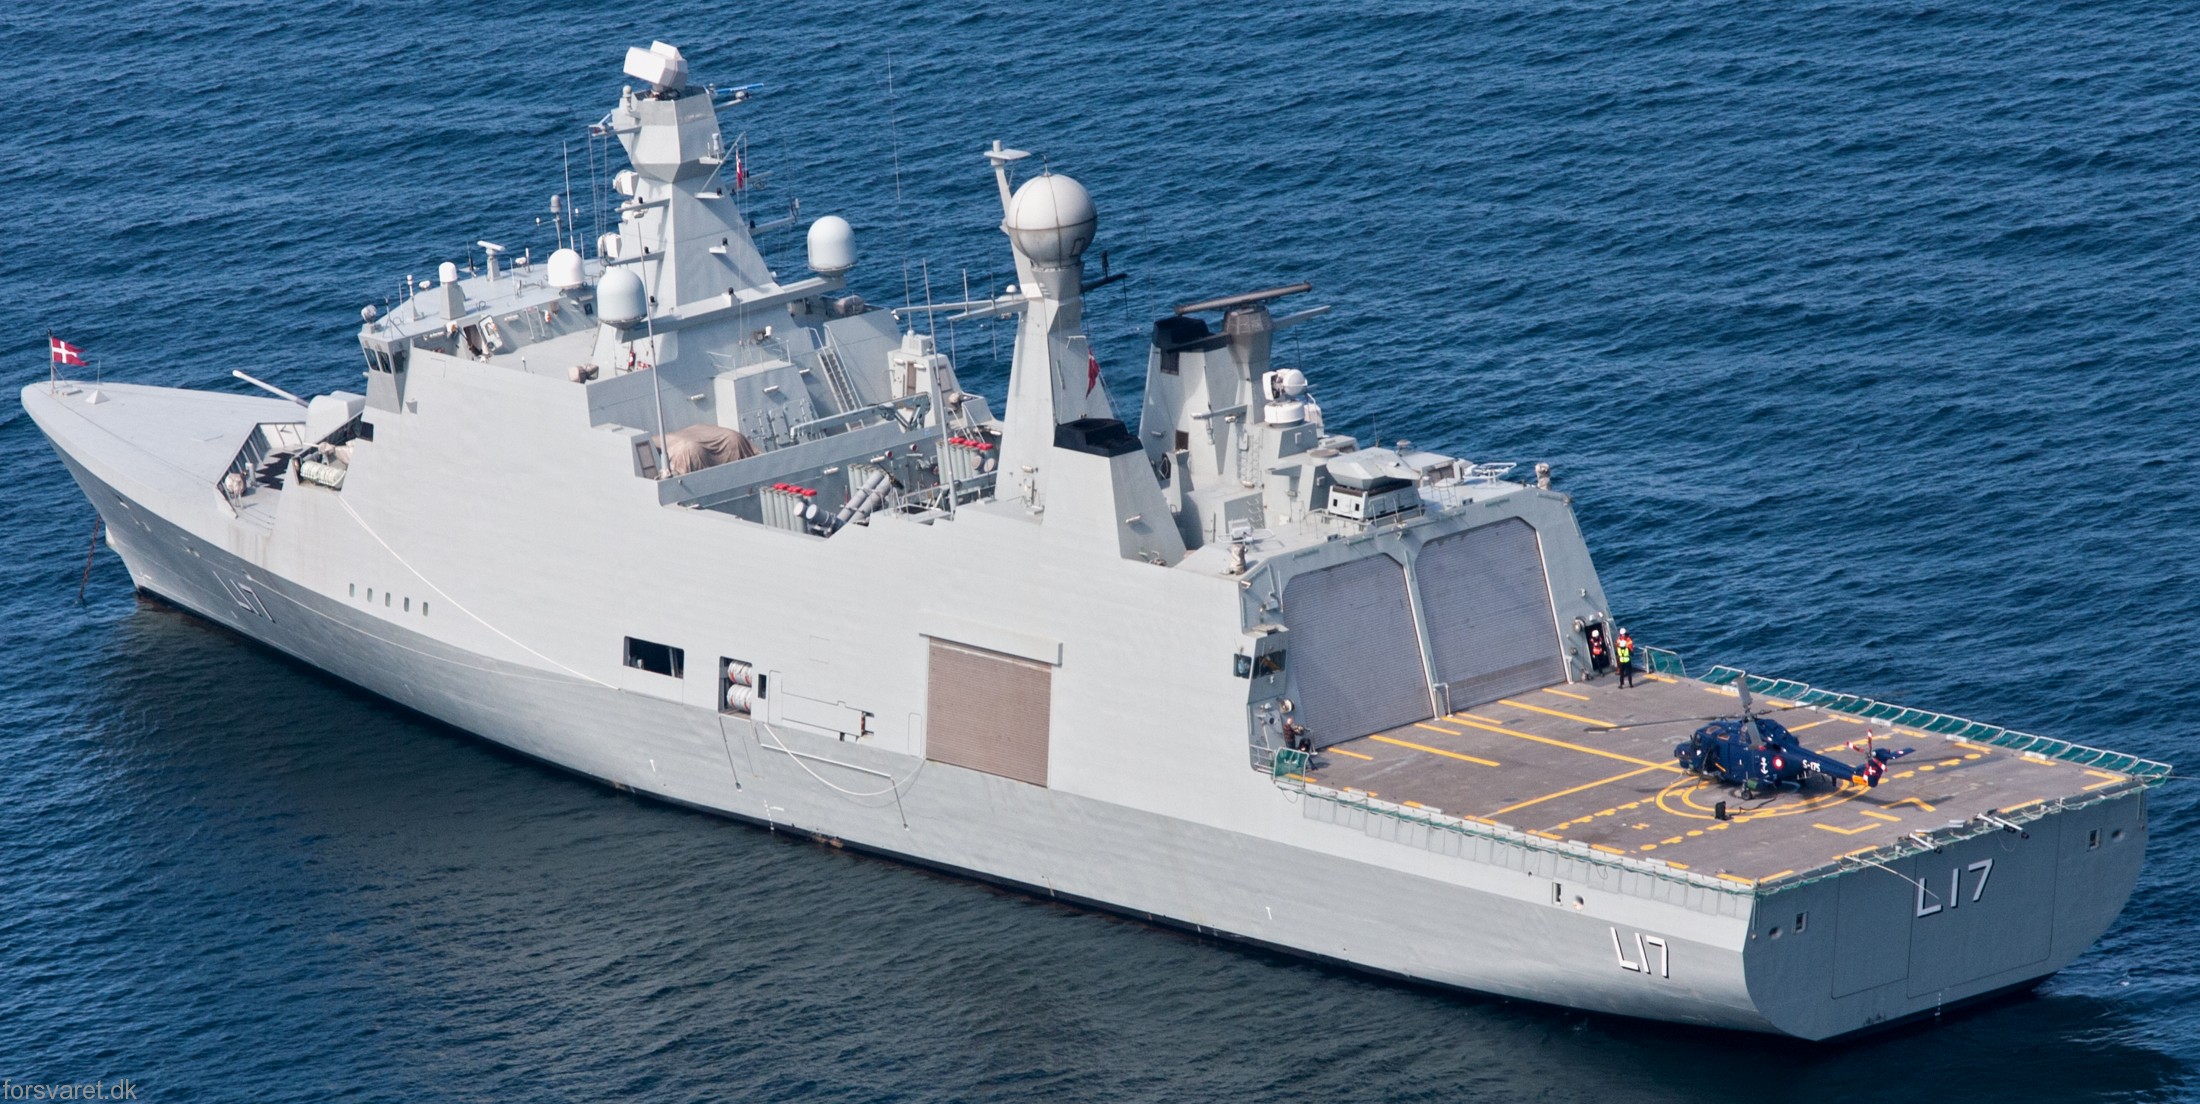 f-342 hdms esbern snare l-17 frigate command support ship royal danish navy 62